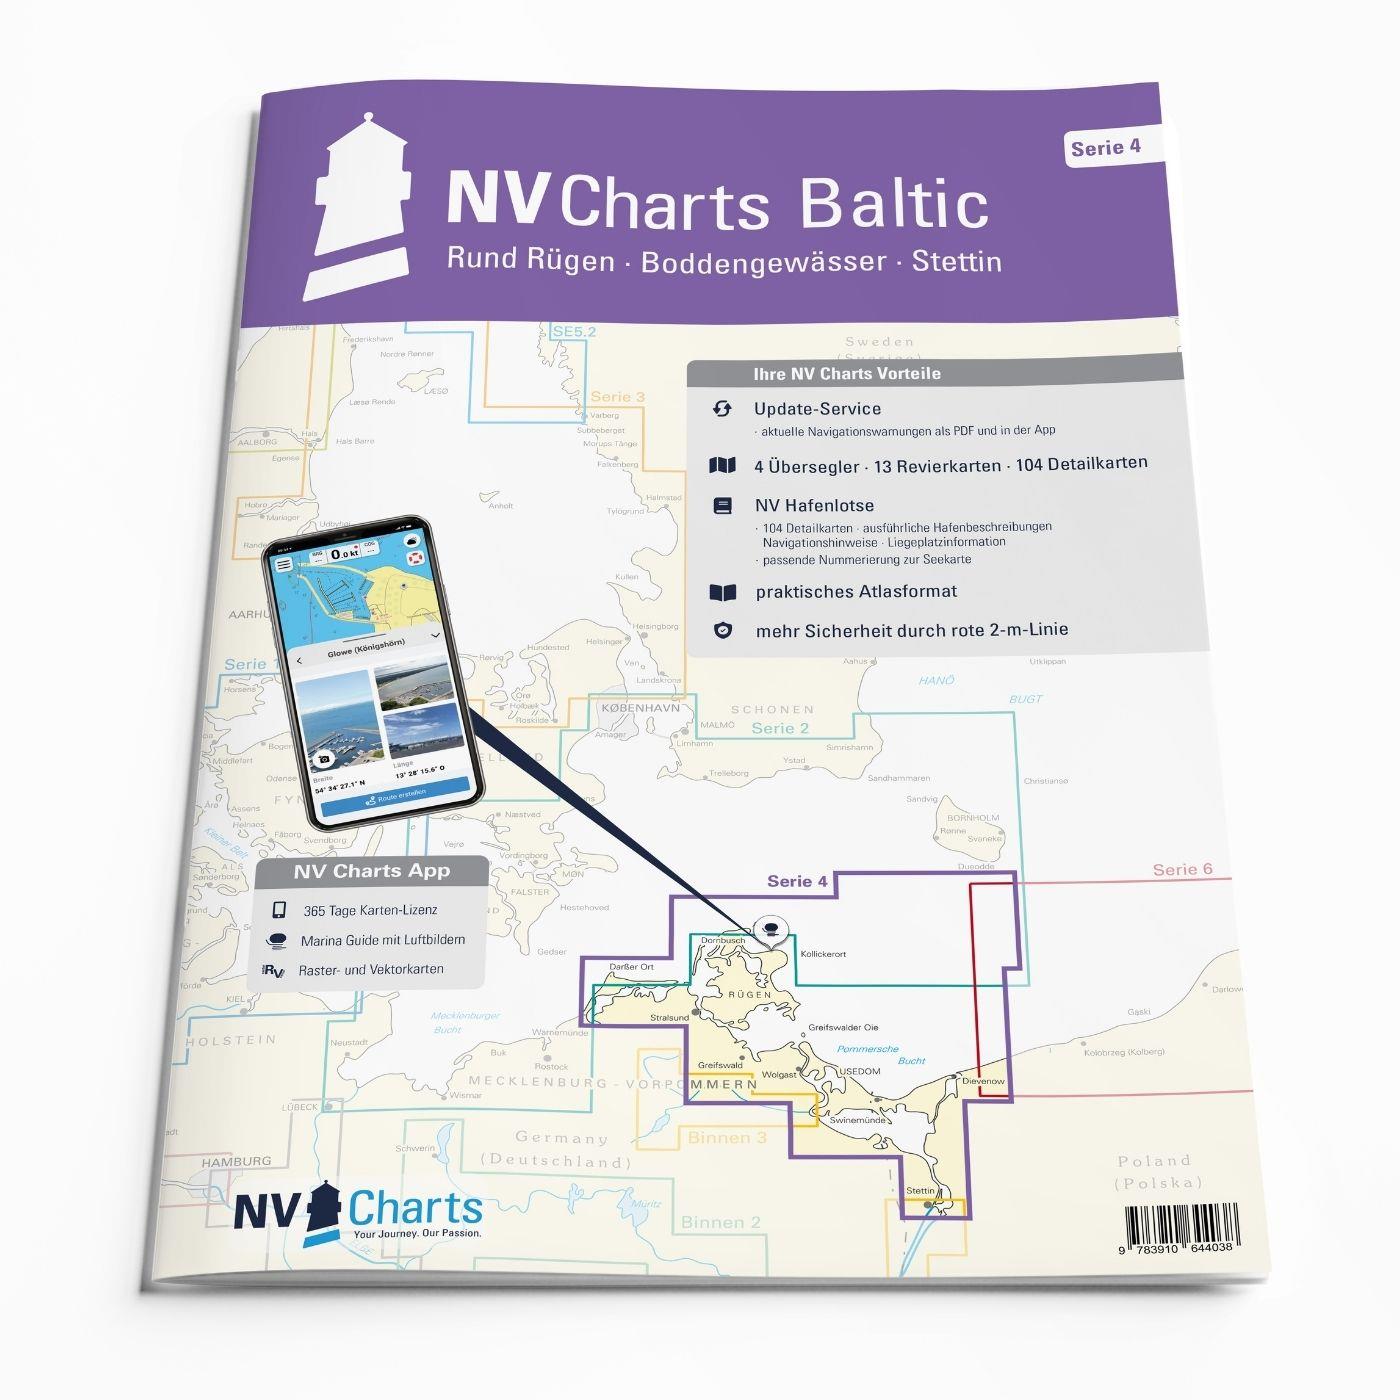 NV Charts Baltic Region 4, East Germany - Rügen to Szczecin